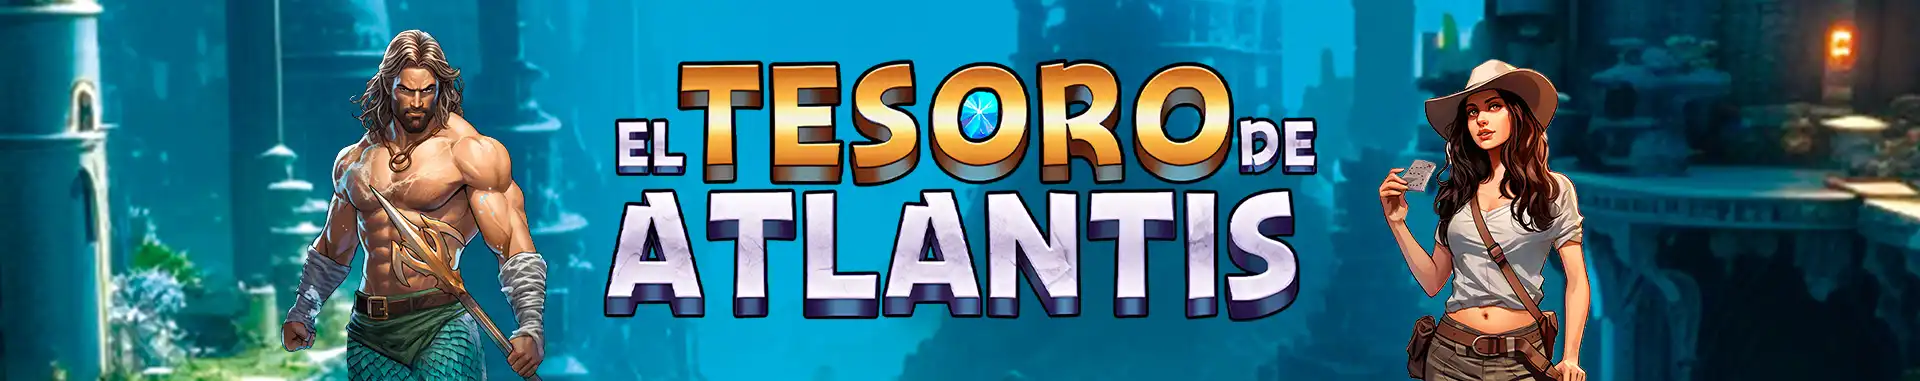 Tragaperras online Tesoro de Atlantis